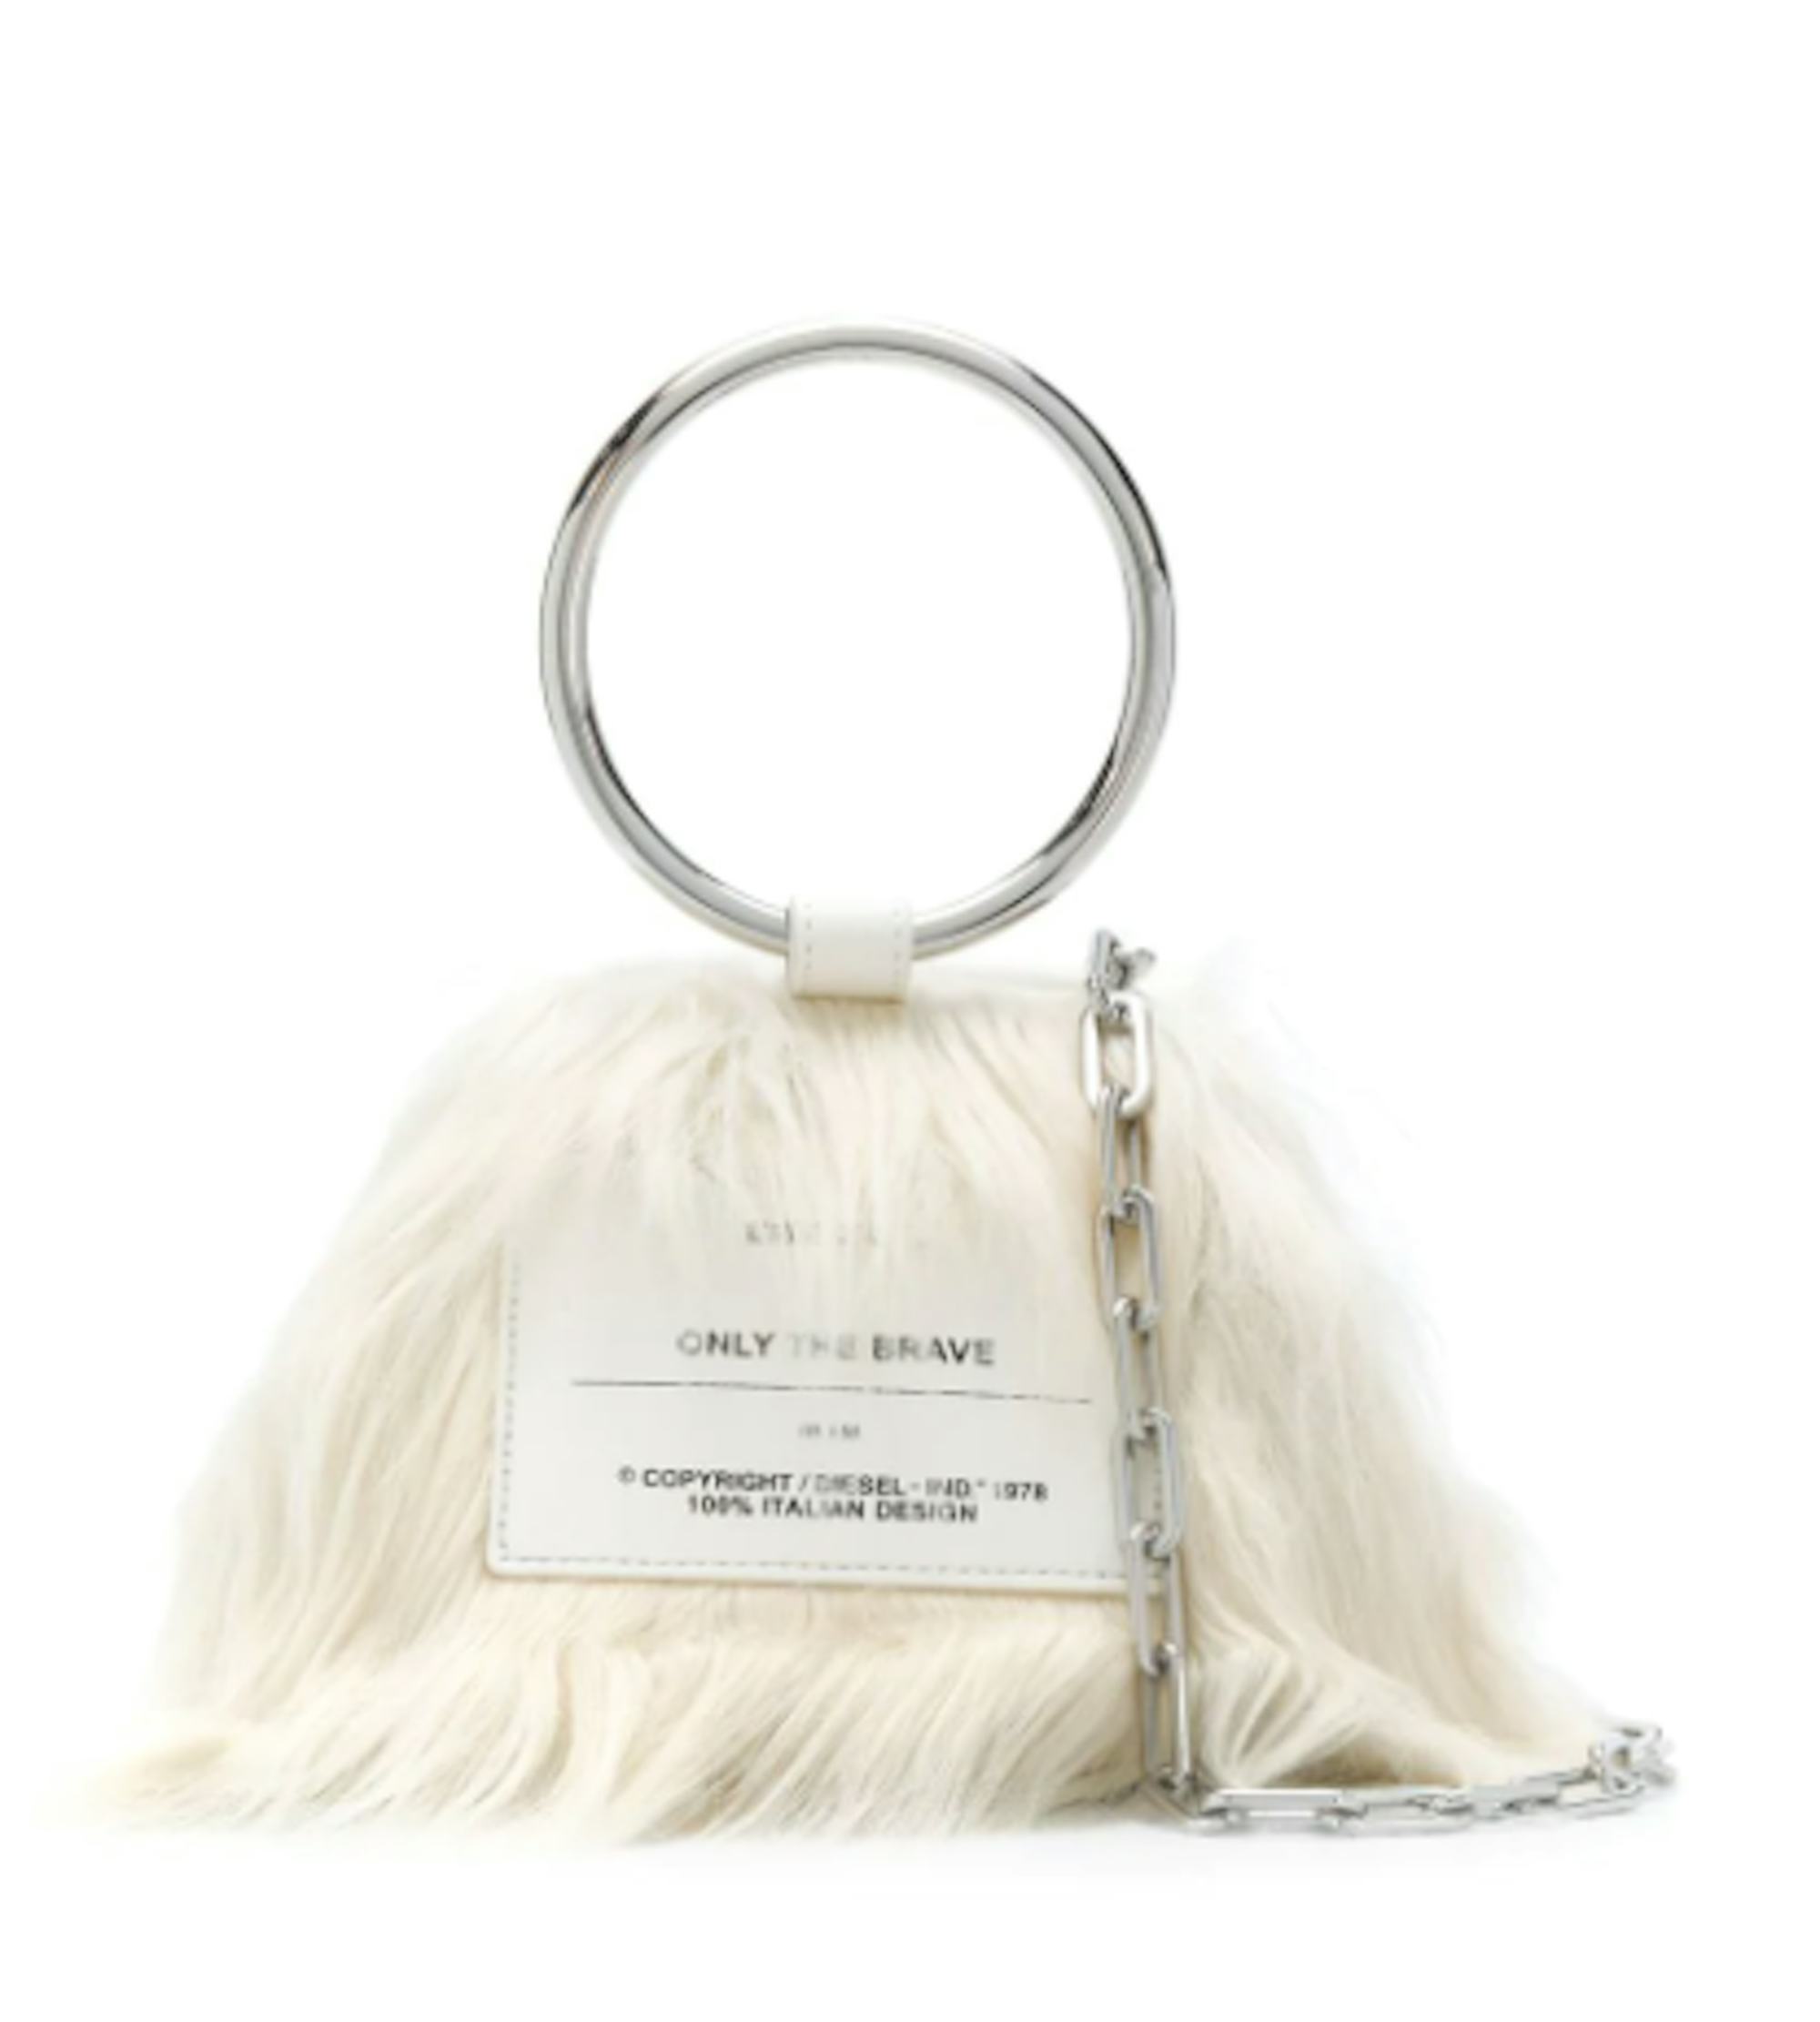 Shop Fuzzy Faux Fur And Shearling Handbags For Fall 2020